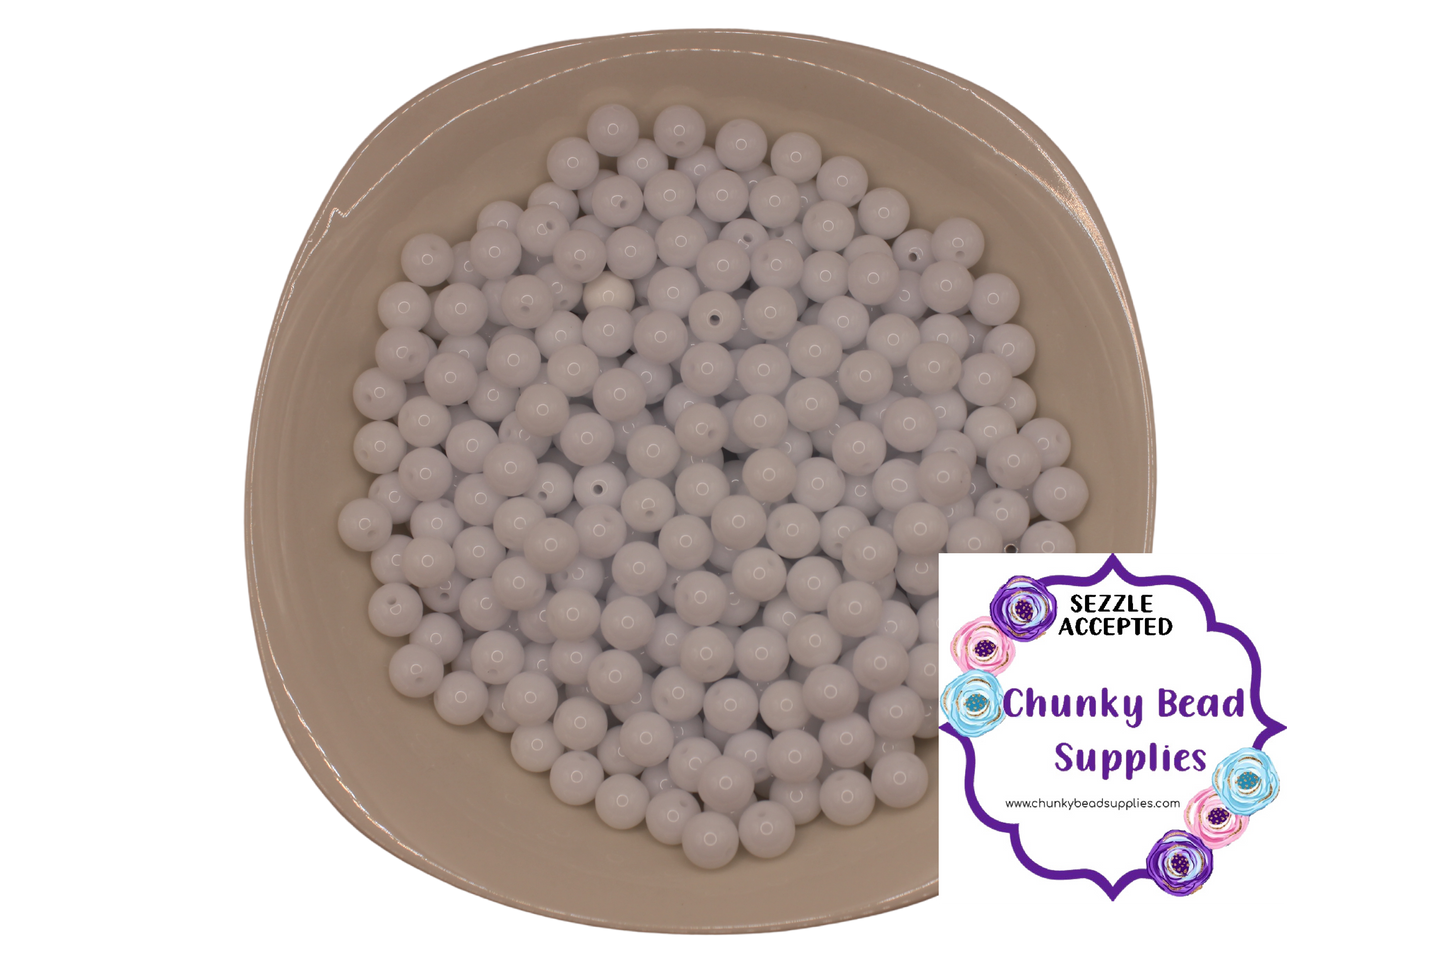 Perles acryliques solides « Super White » de 12 mm, fournitures de perles CBS Chunky, perles Gumball, perles Bubblegum chunky